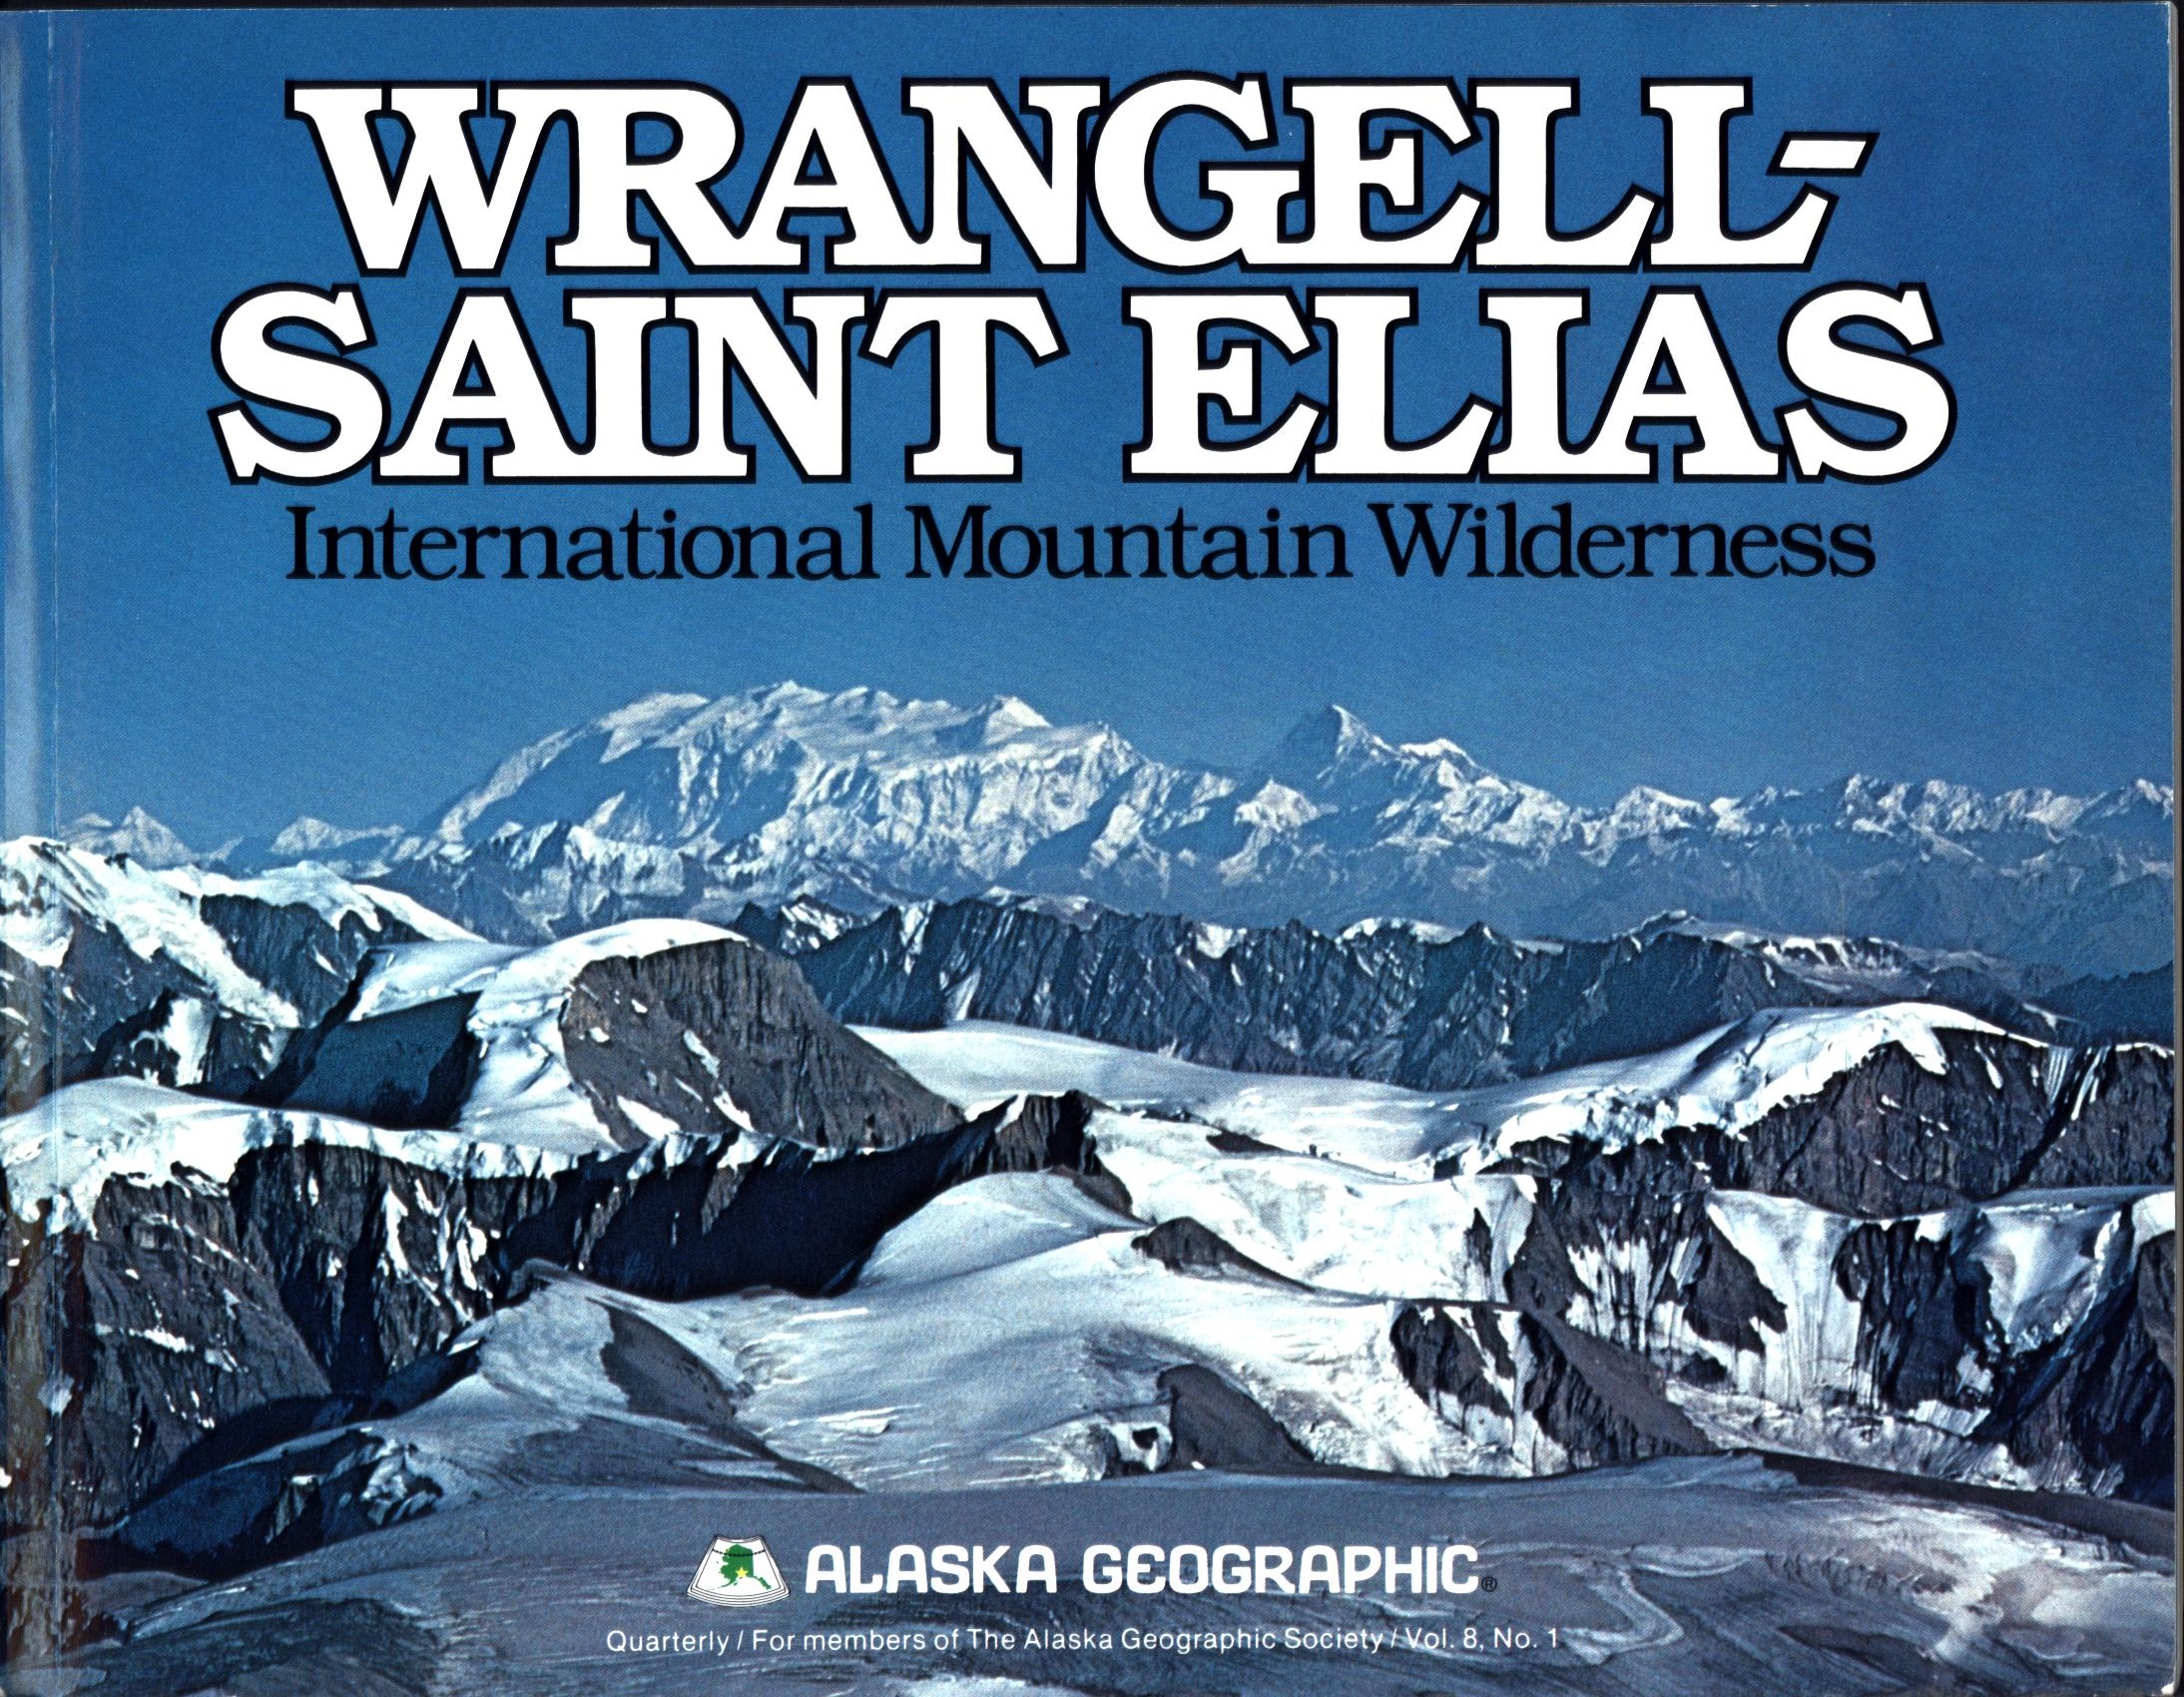 WRANGELL-SAINT ELIAS: International Mountain Wilderness. 